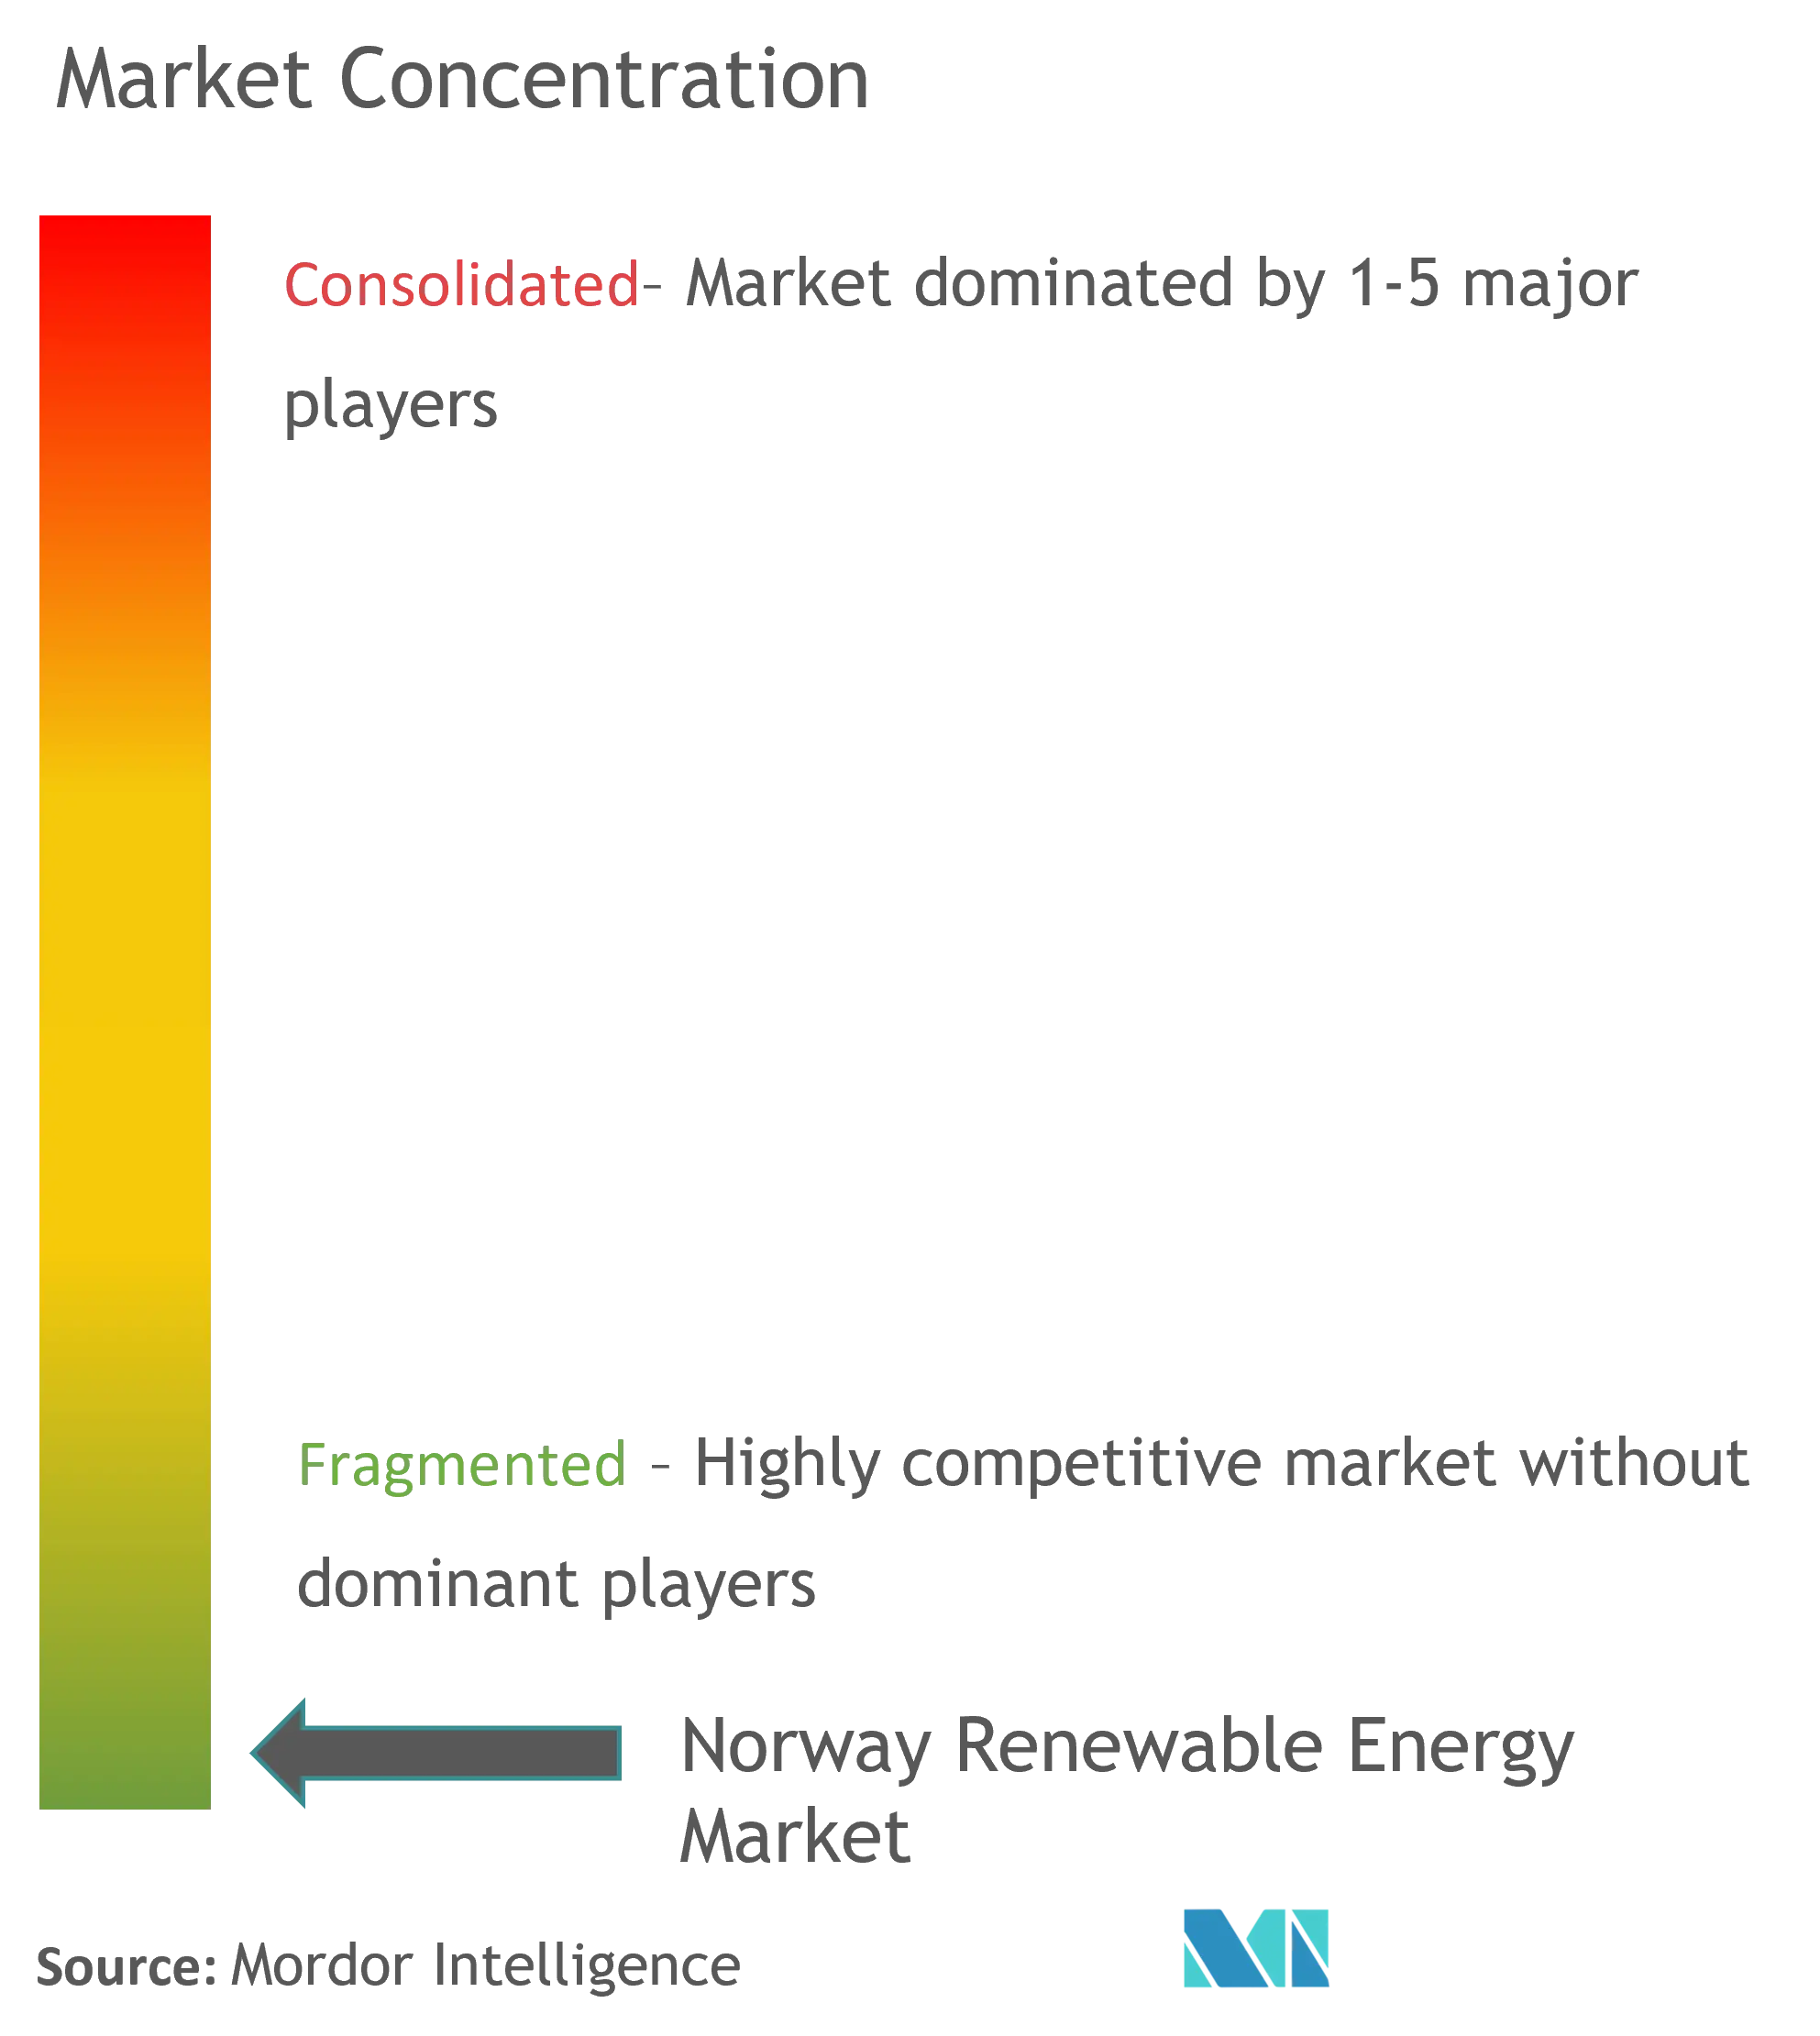 Norway Renewable Energy Market Concentration